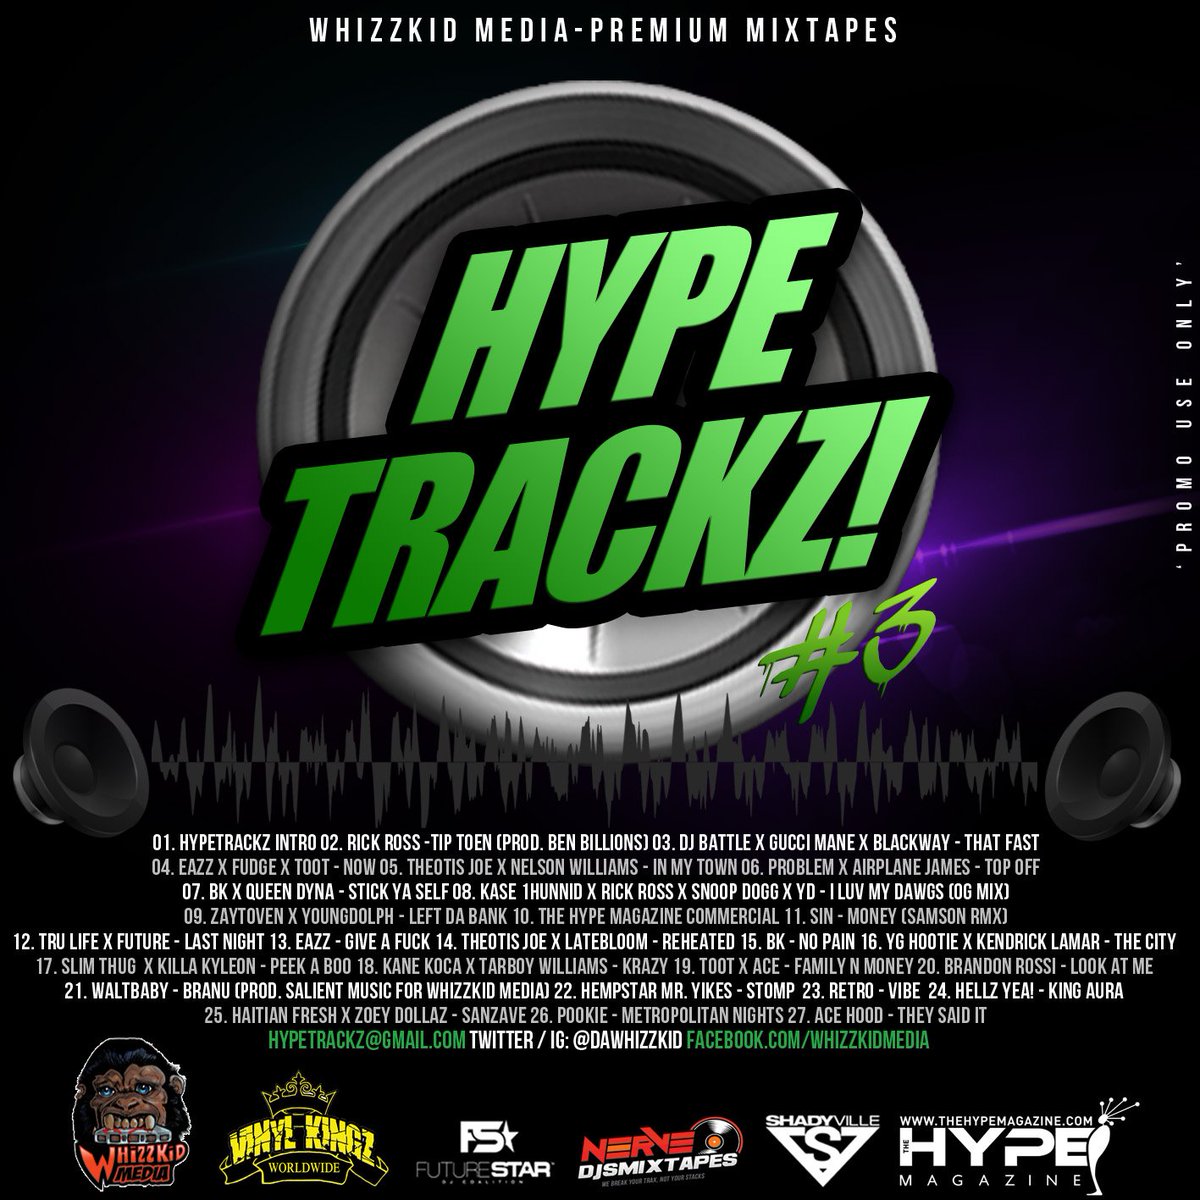 Artists to watch and major tracks on 'HypeTrackz Vol. 3':  audiomack.com/album/the-whiz…  
#HipHop  #Rap #HipHopMixtape